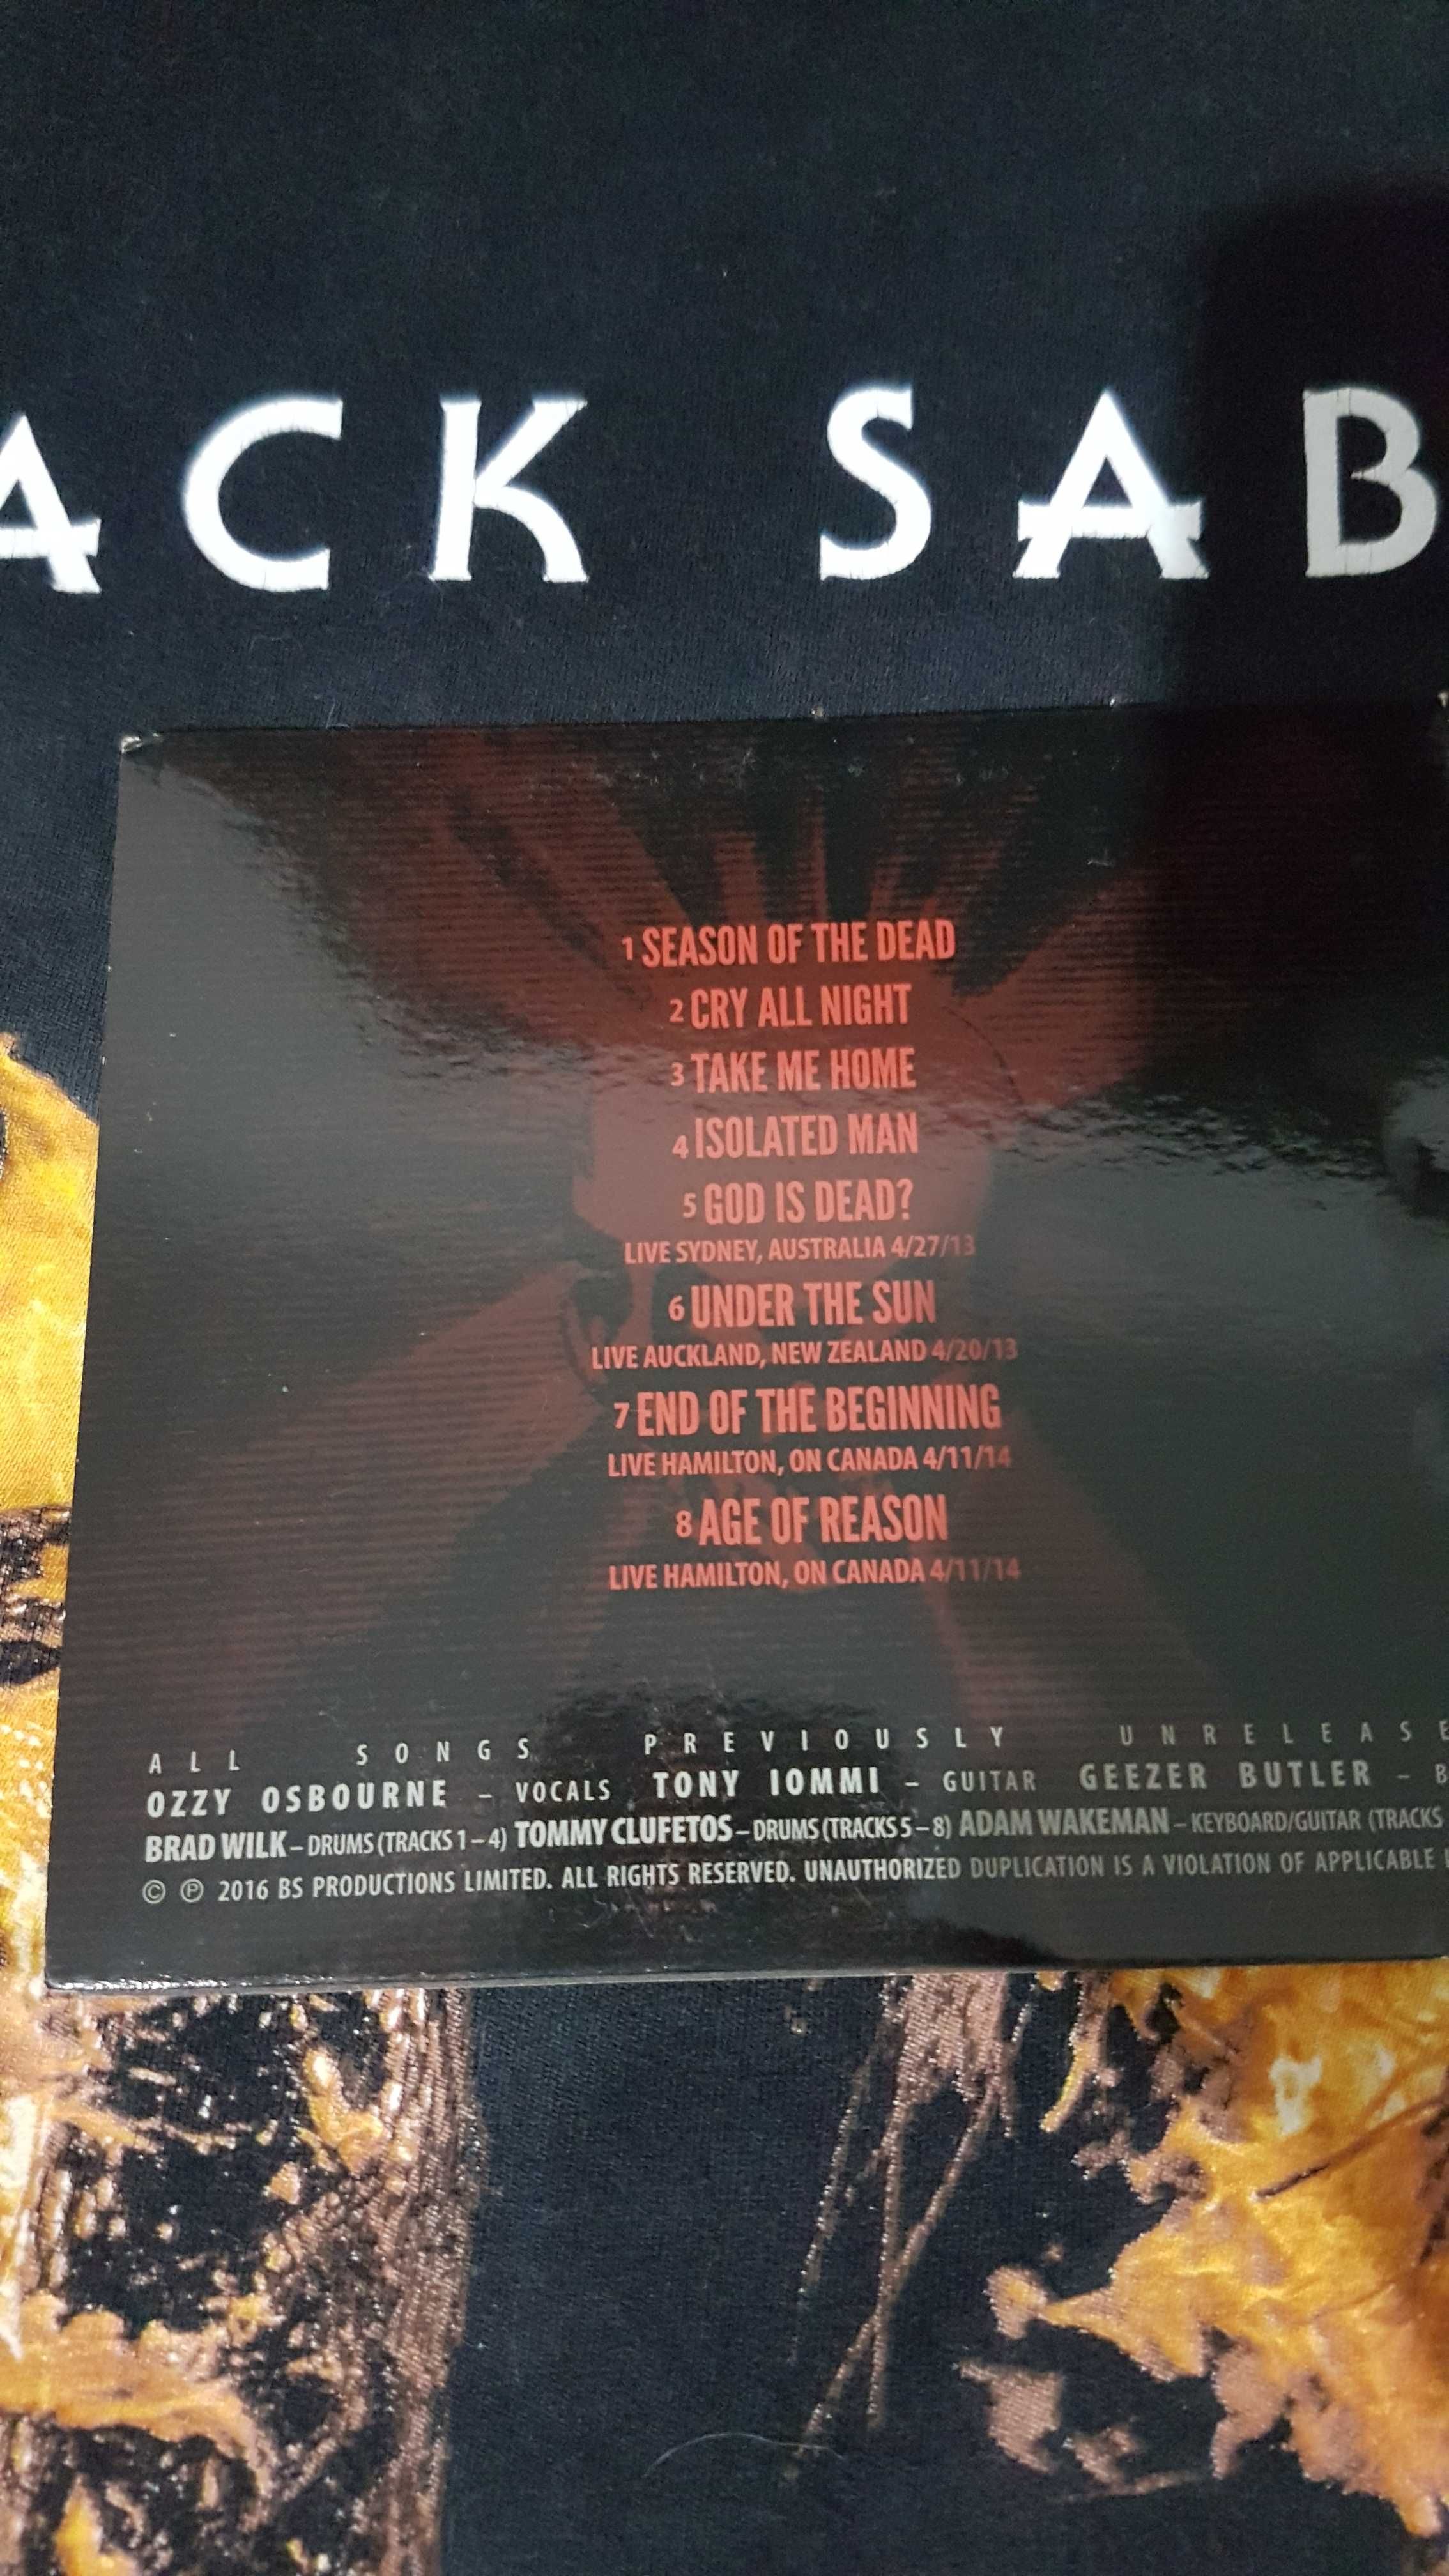 Black Sabbath - The End / CD Autografado - Ed. Limitada